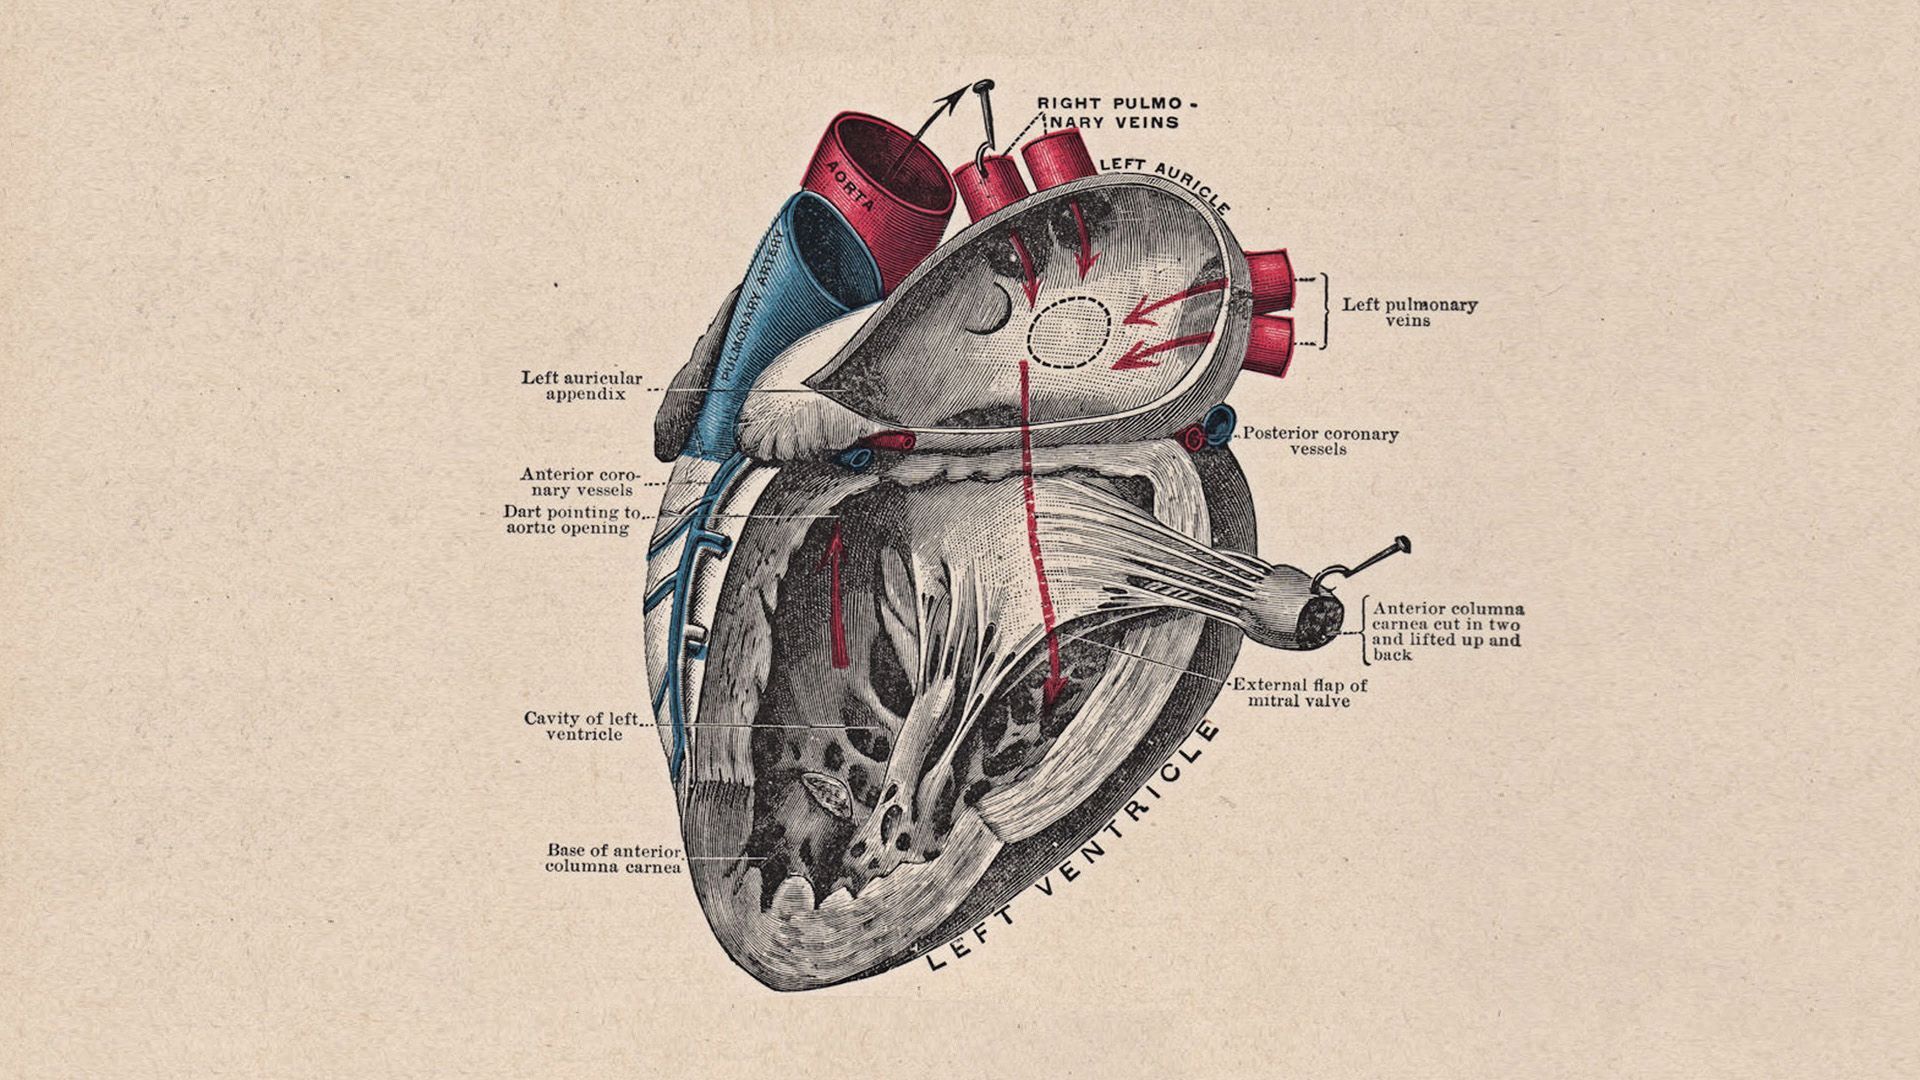 Heart Anatomy Diagram